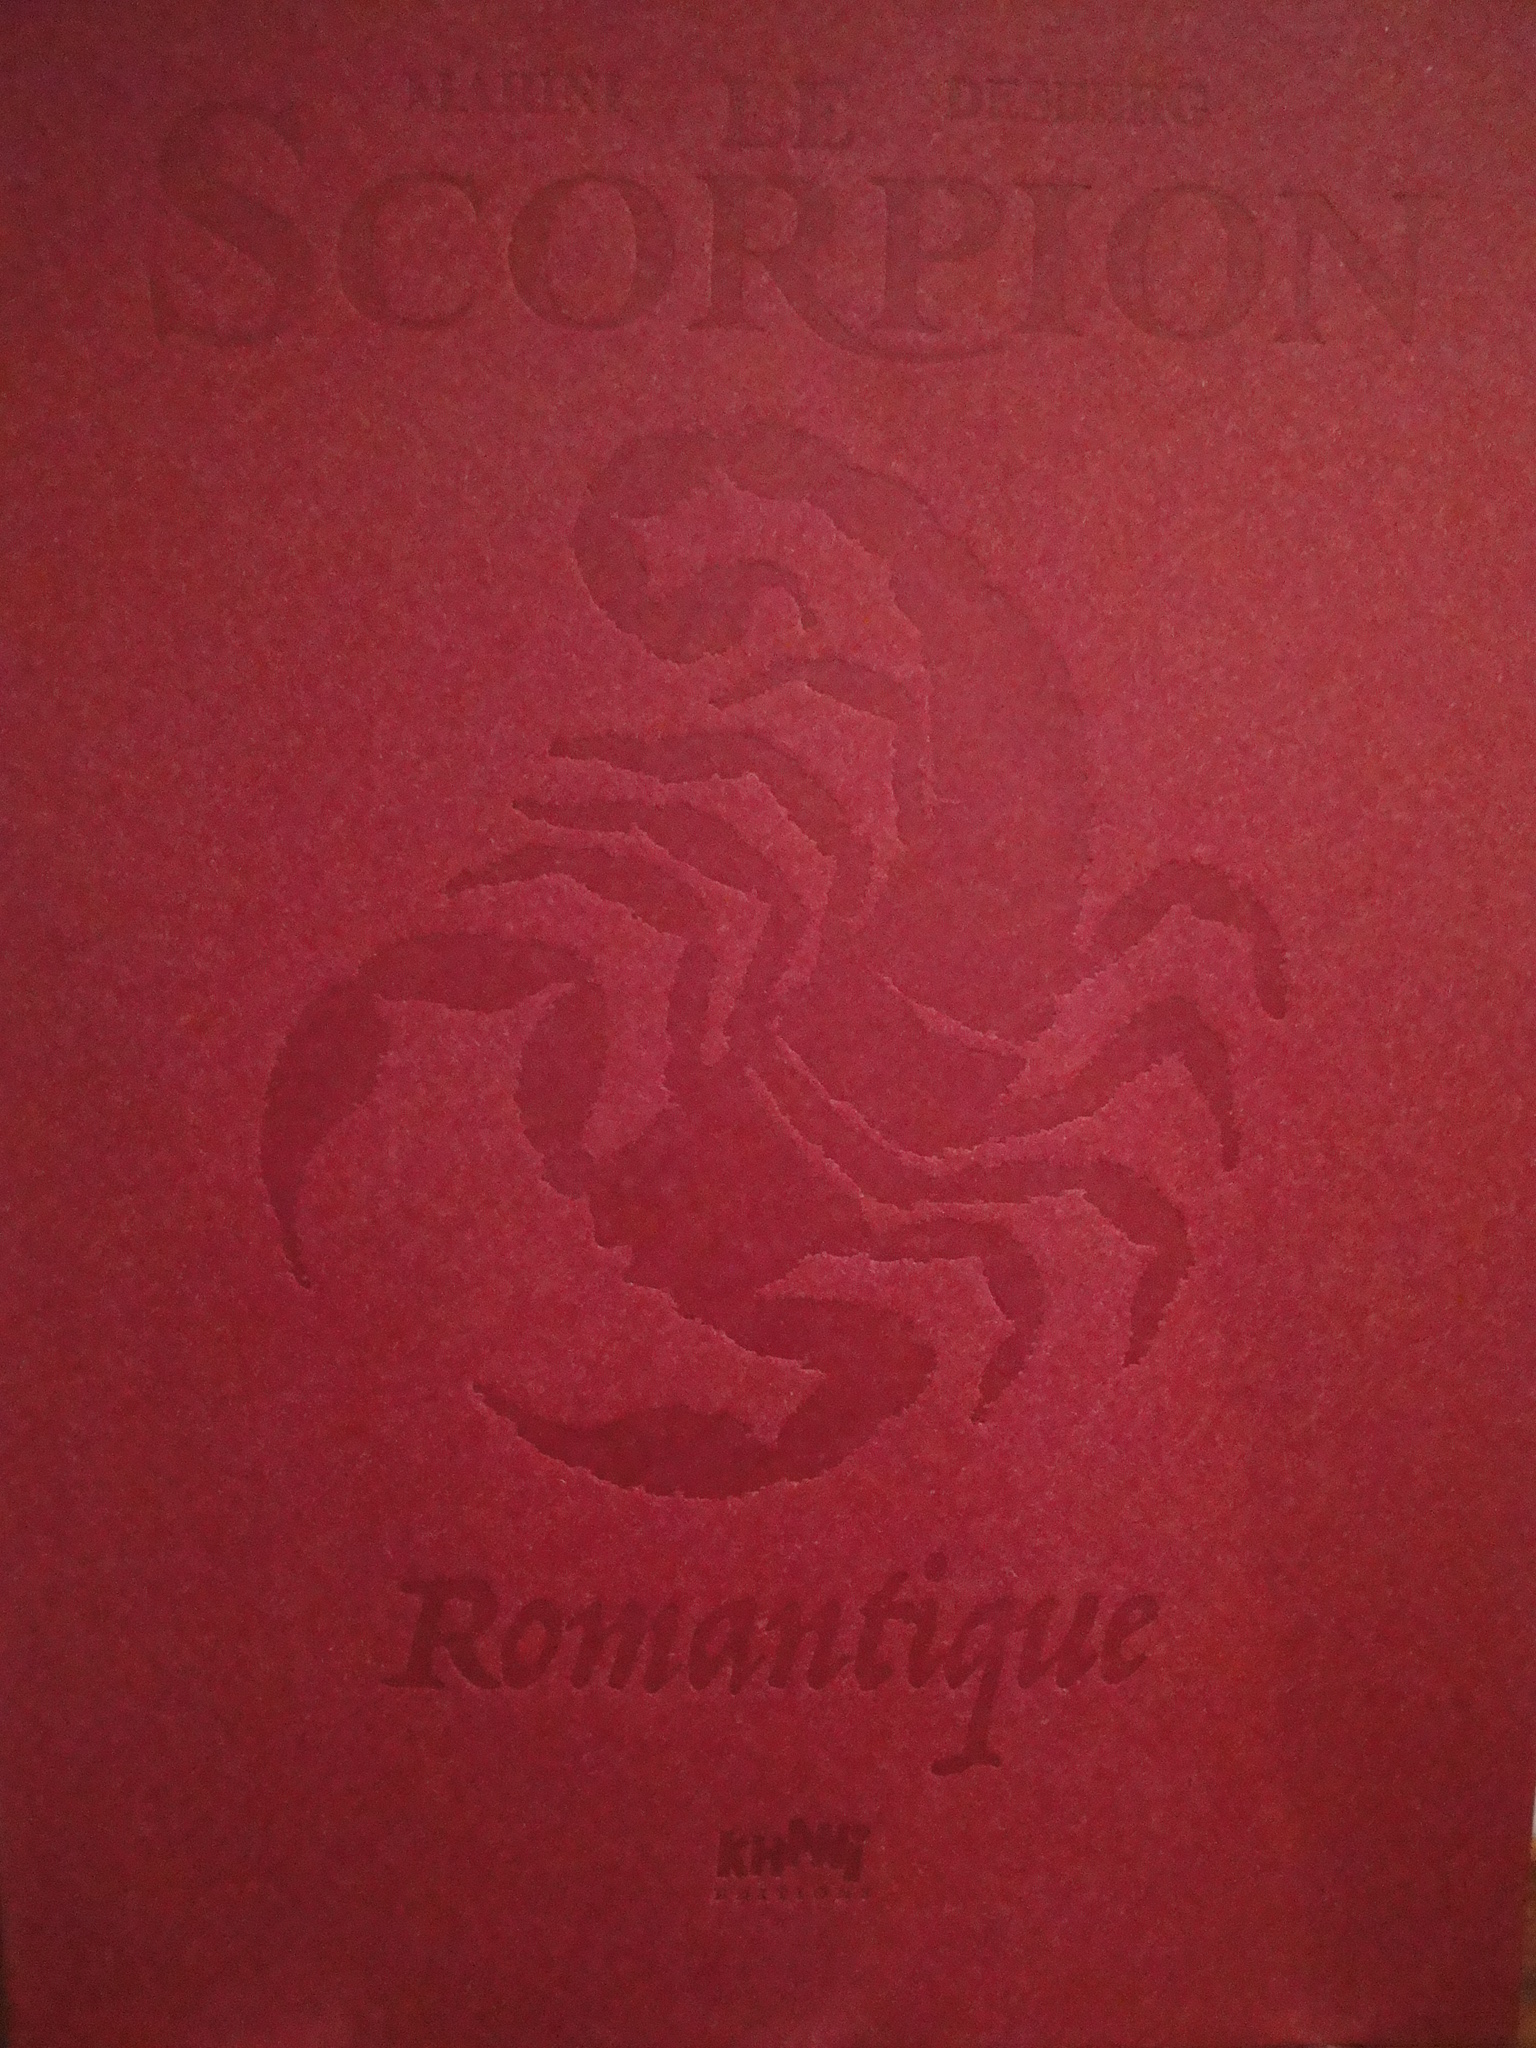 E. Marini – Portfolio Scorpion “Romantique” (2015)